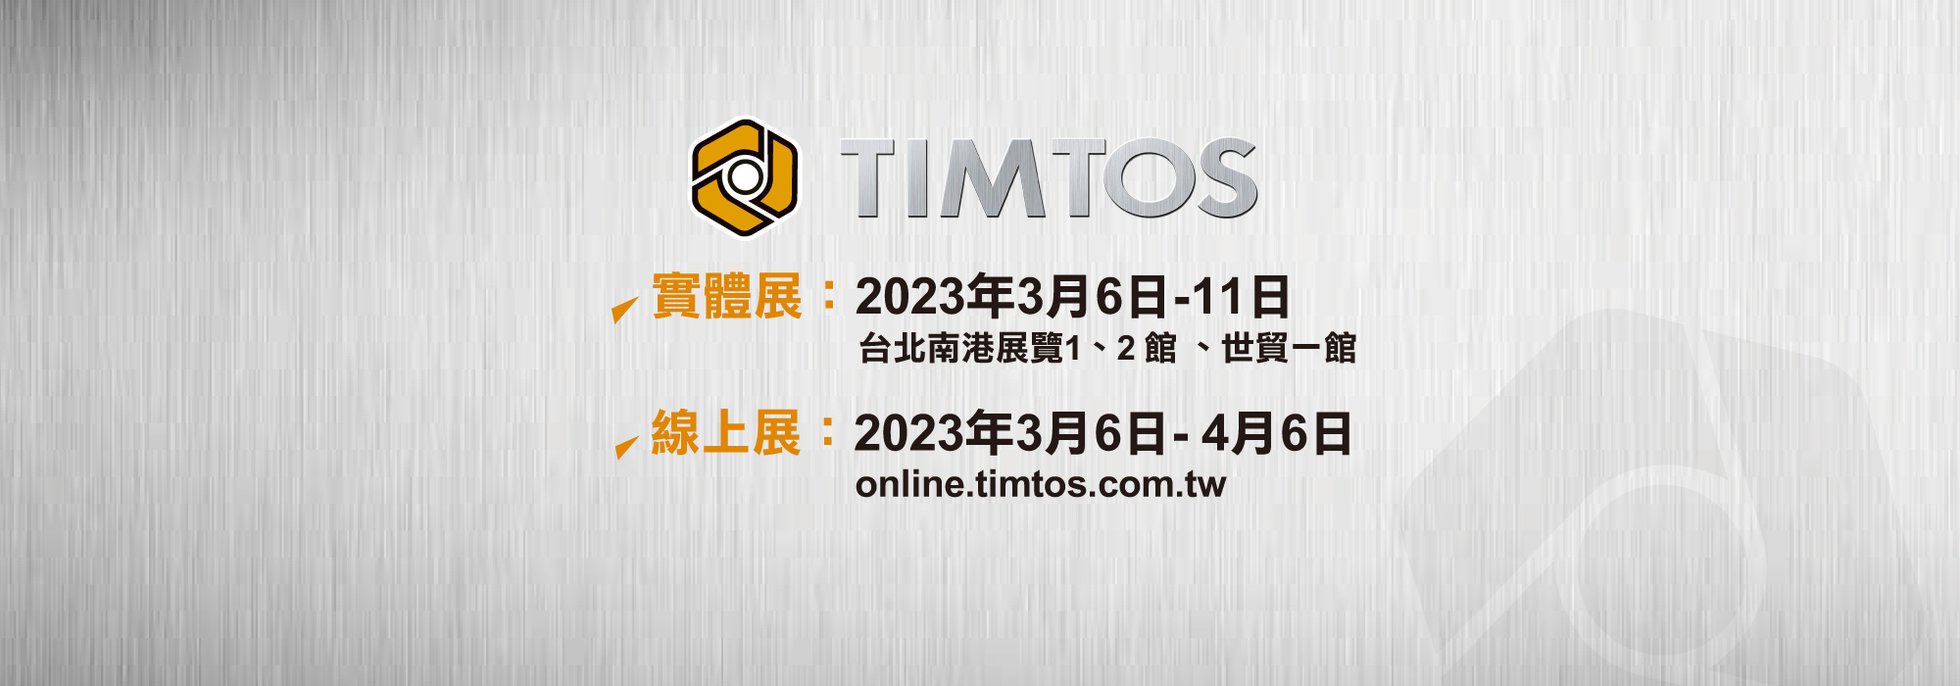 TIMTOS 2023 台北国际工具机展